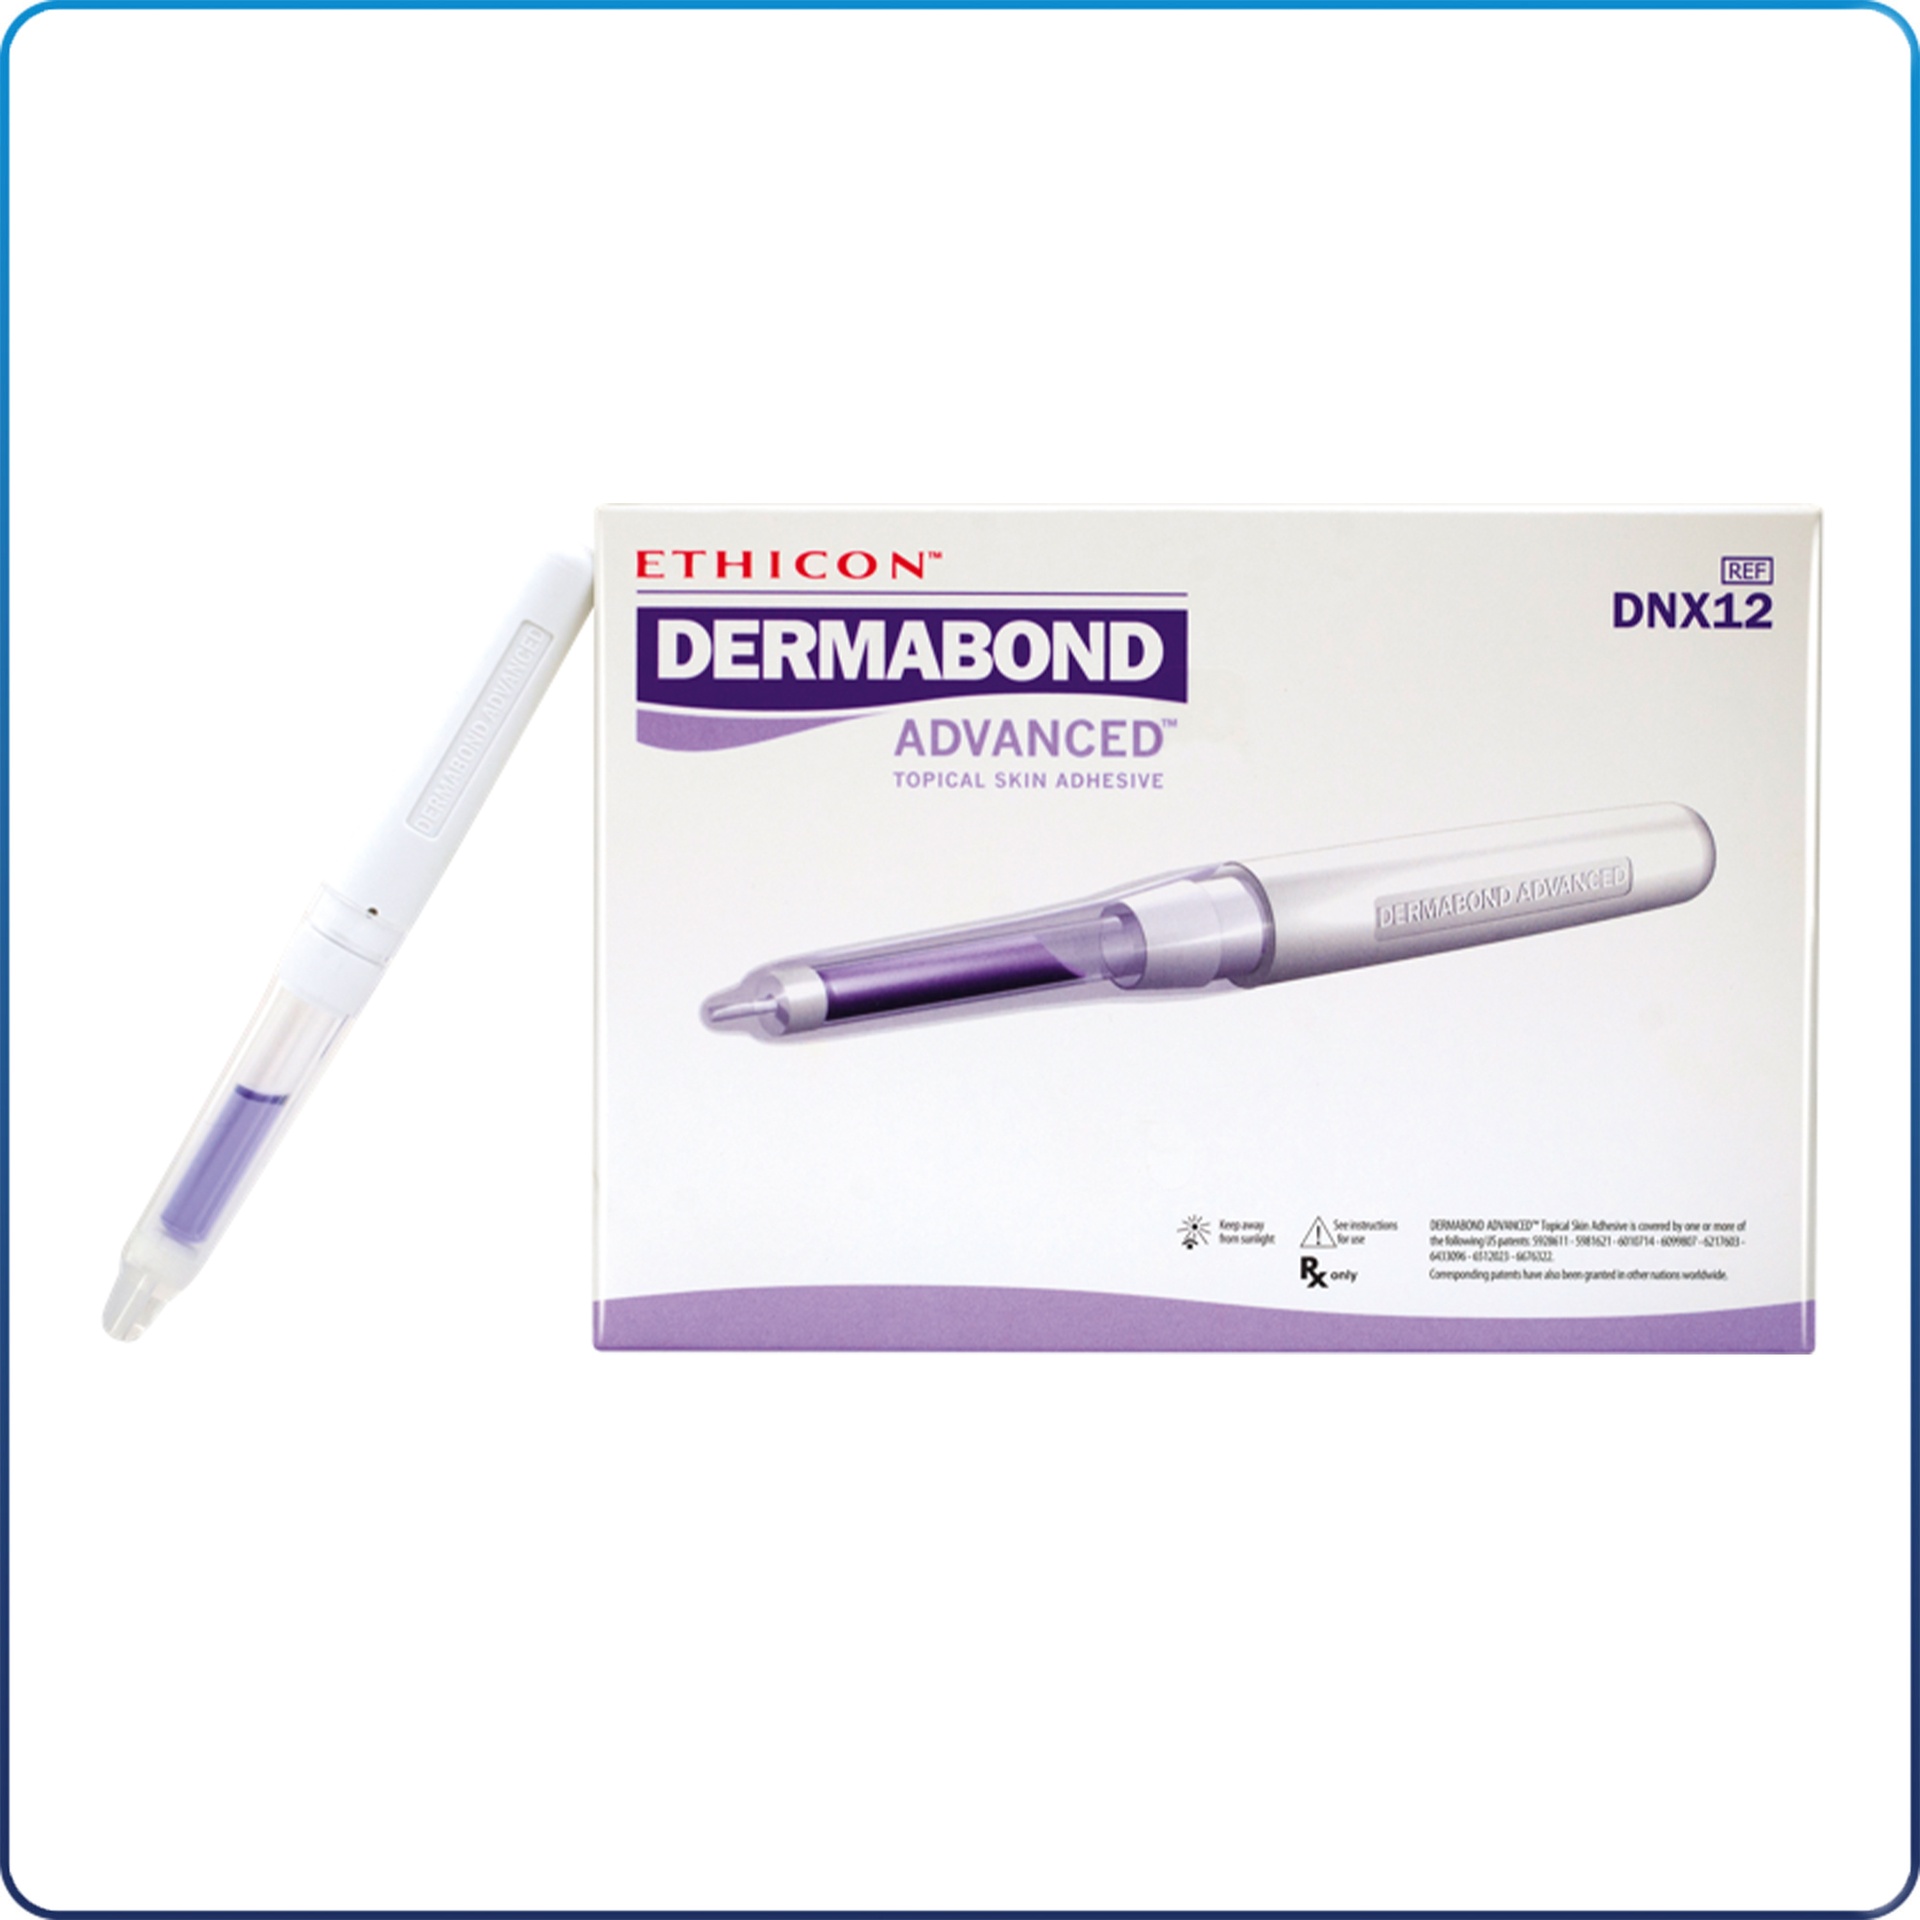 [DNX12] DERMABOND ADVANCED Topical Skin Adhesive